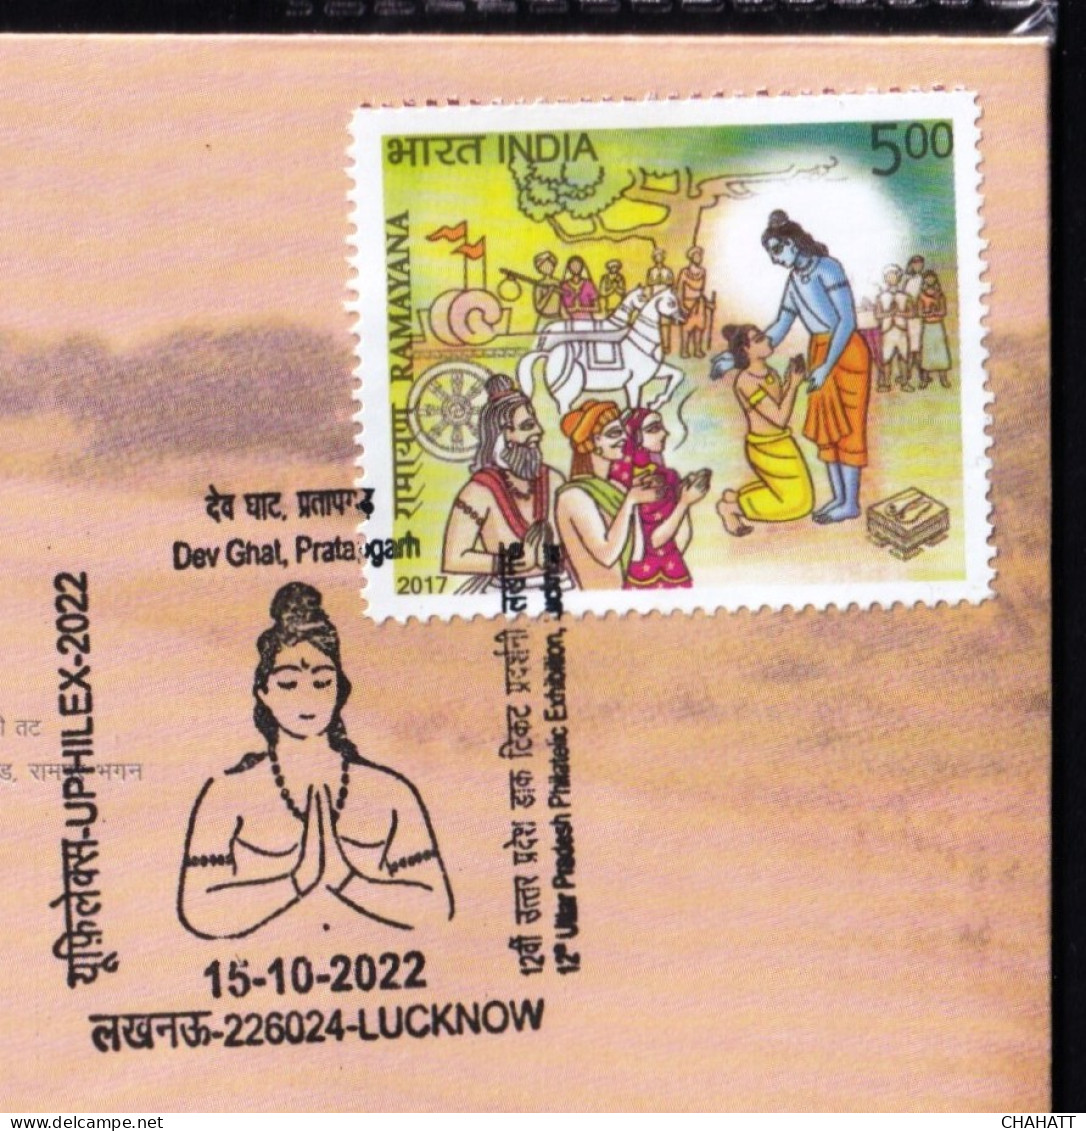 HINDUISM - RAMAYAN-  DEV GHAT, PRATAPGARH - PICTORIAL CANCELLATION - SPECIAL COVER - INDIA -2022- BX4-23 - Hindoeïsme